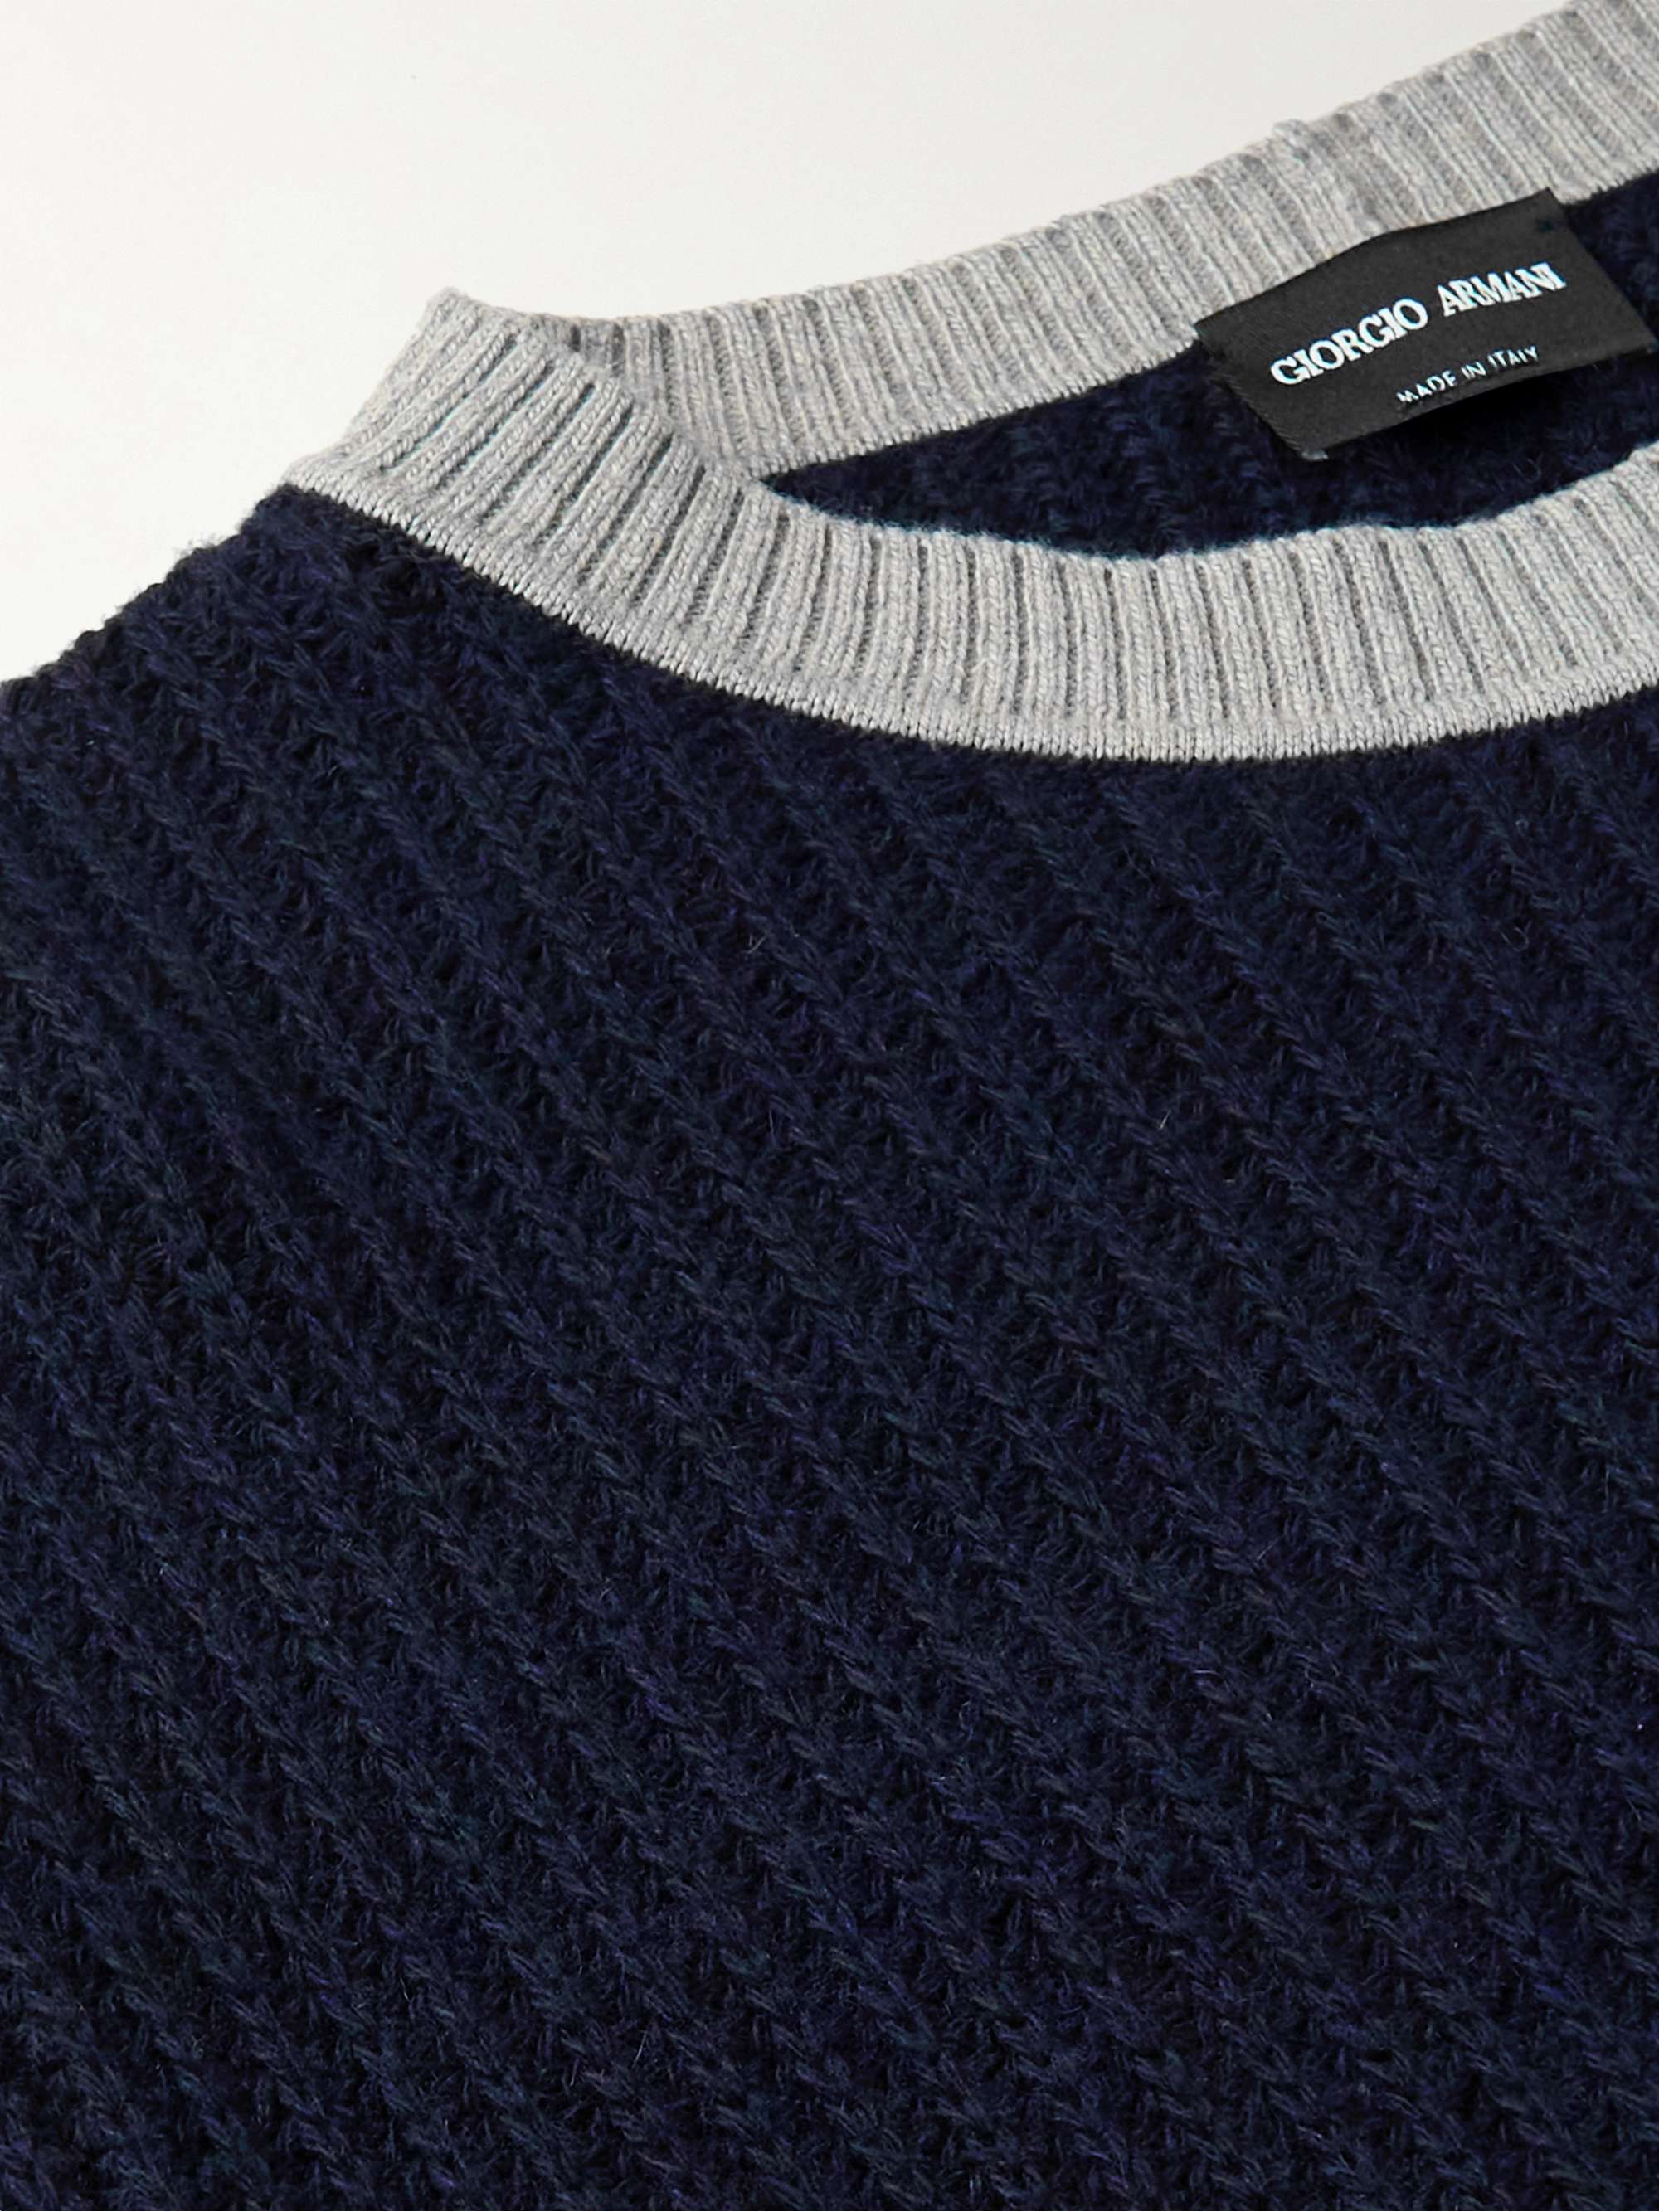 GIORGIO ARMANI Two-Tone Ribbed Cashmere and Cotton-Blend Sweater